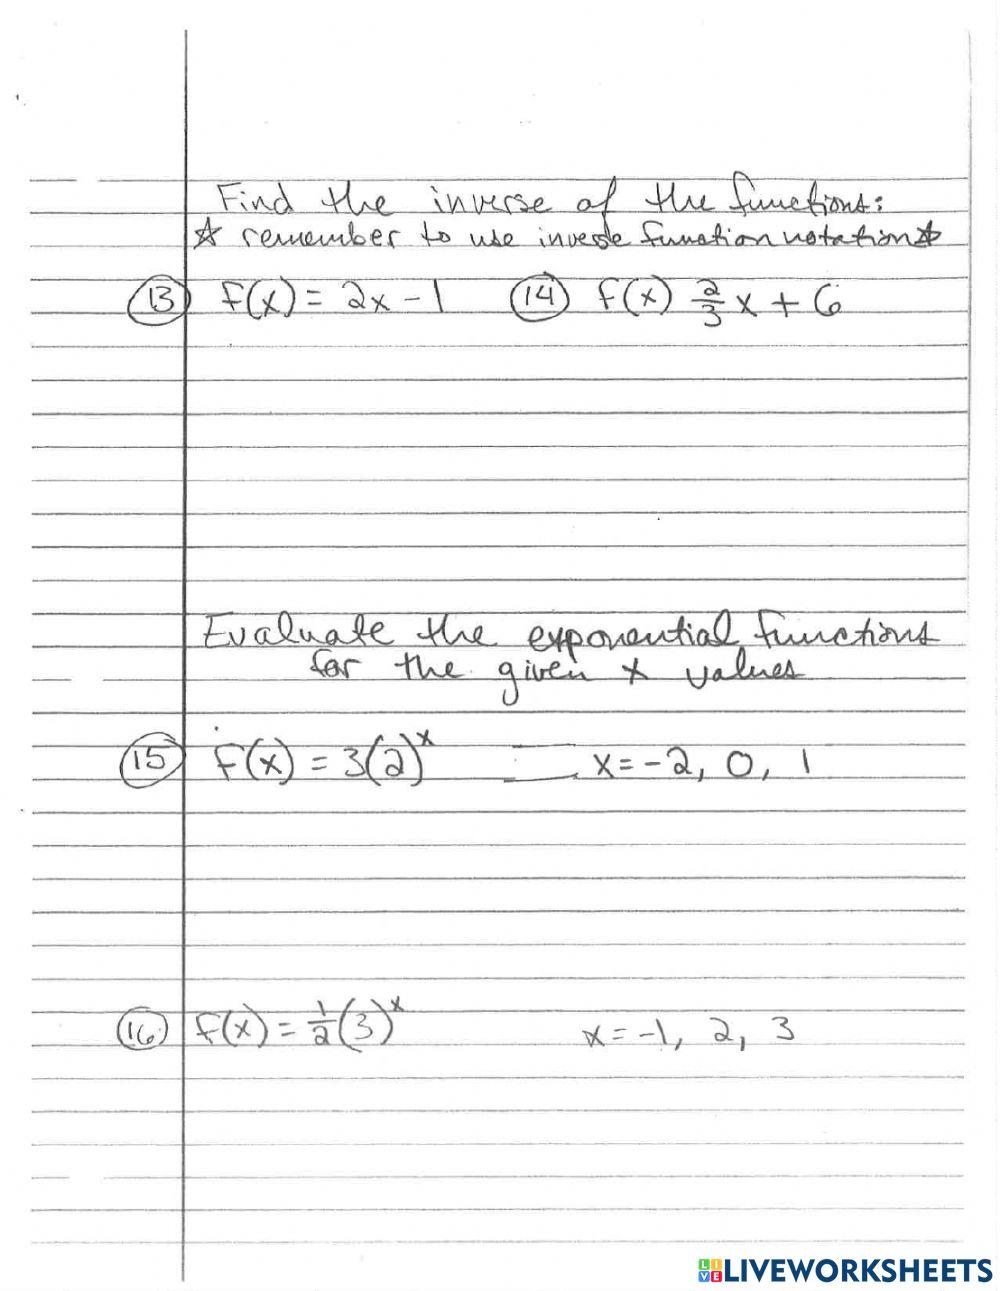 Functions Quiz - Algebra 1